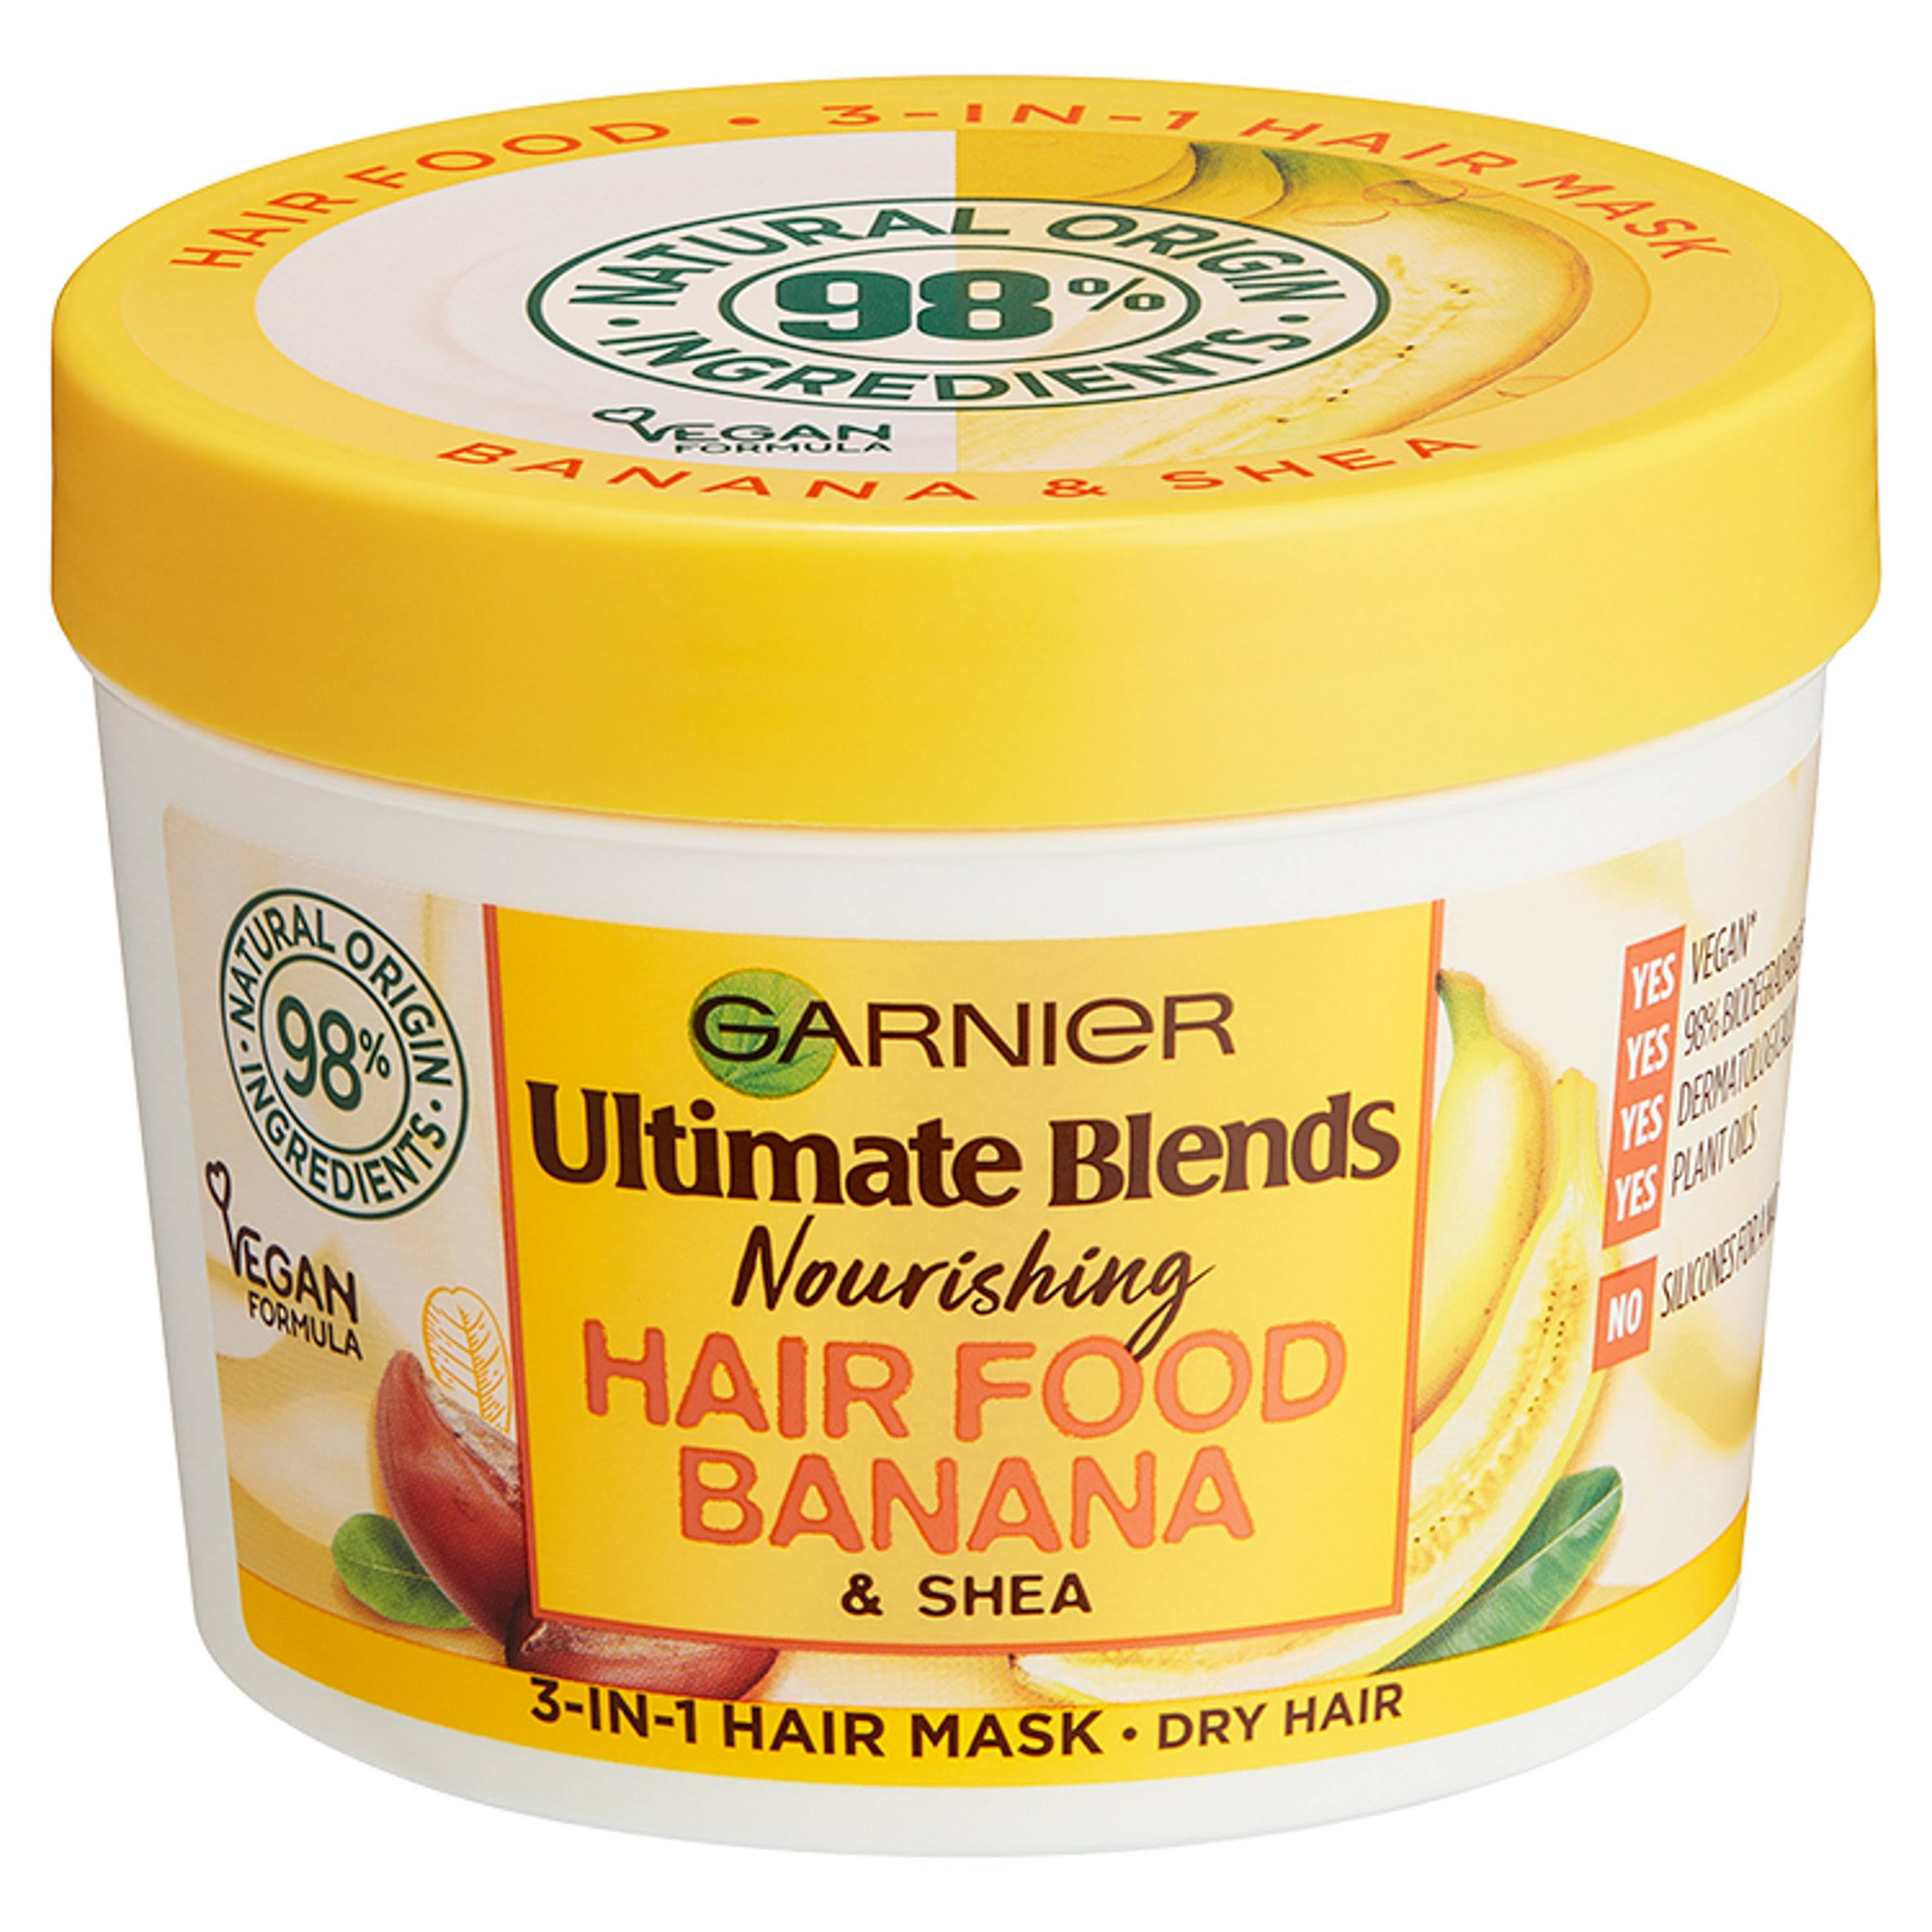 Garnier Ultimate Blends Hair Food Banana 3 in 1 Dry Hair Mask Treatment - 390ml